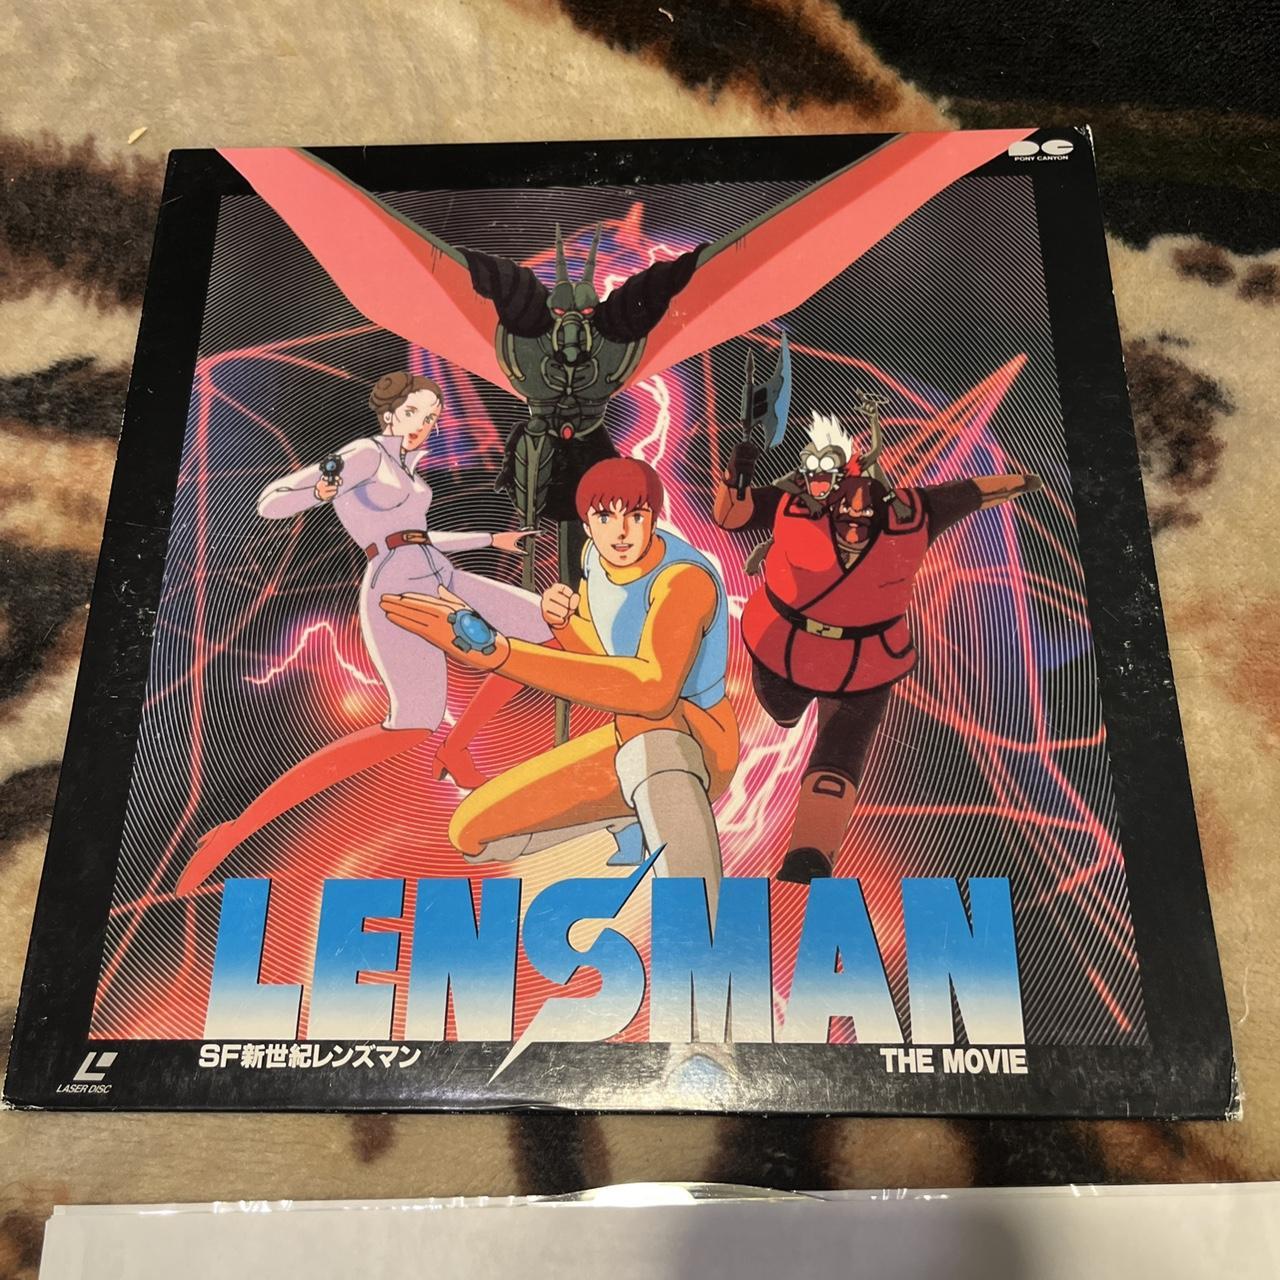 SF Shinseiki Lensman - My Anime Shelf